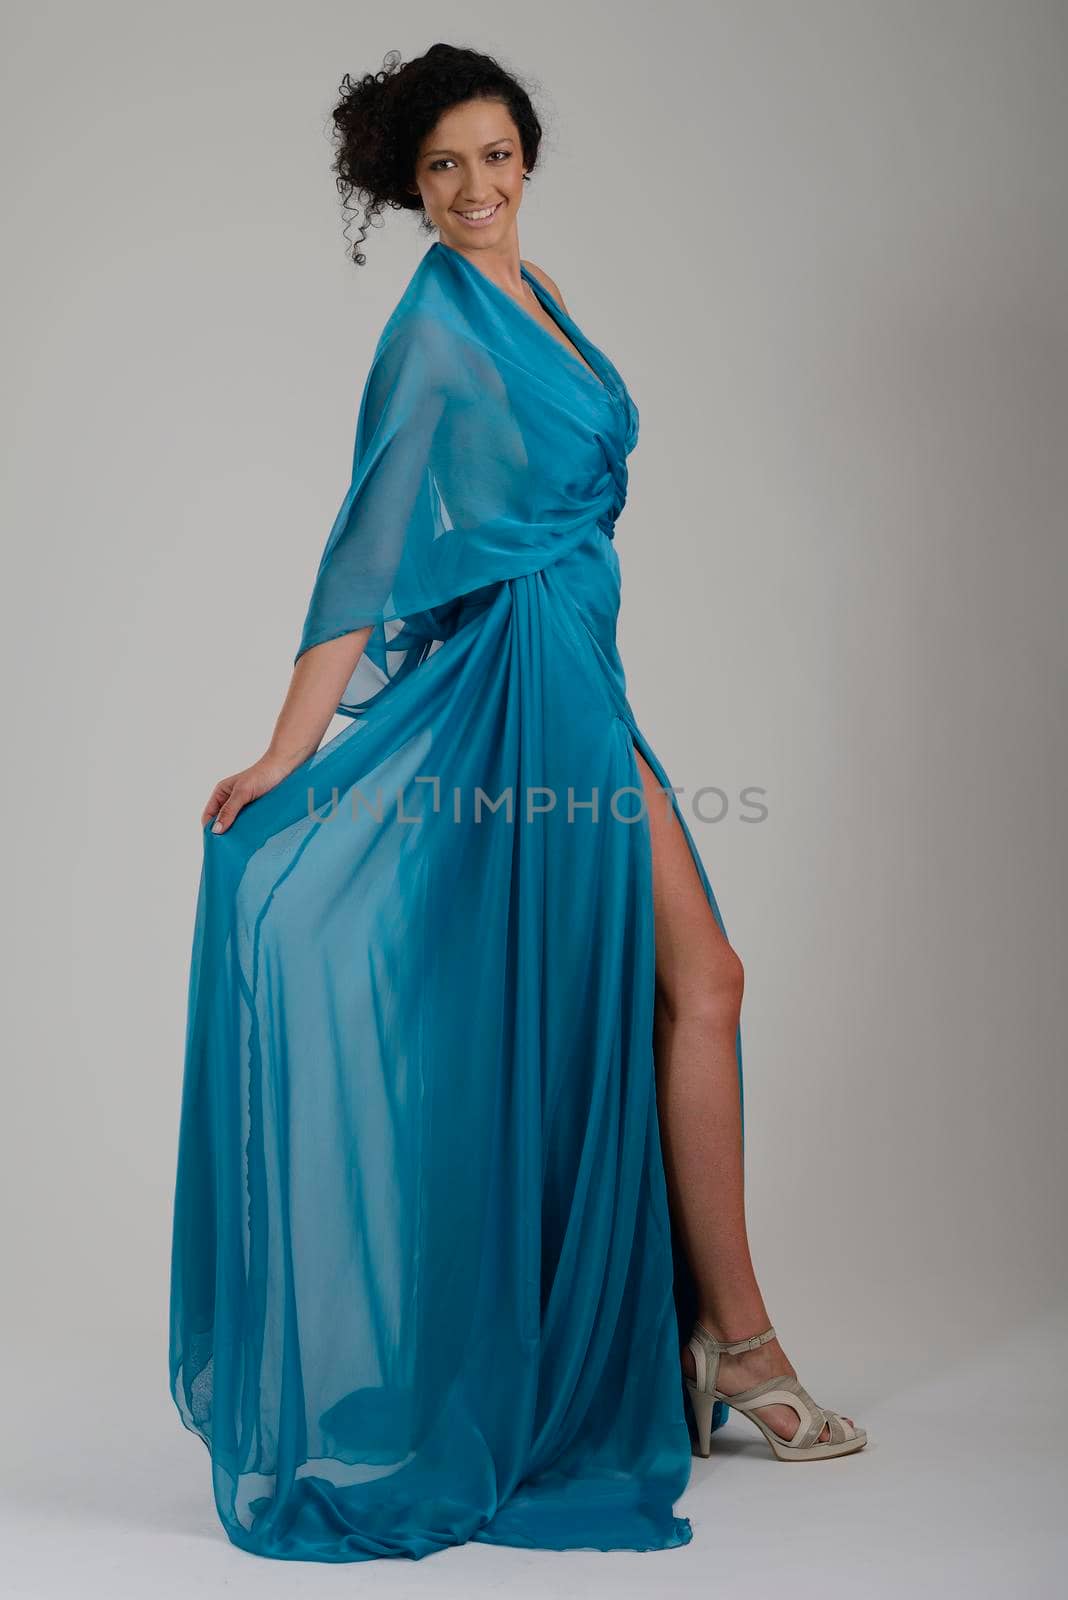 elegant woman in fashionable dress posing in the studio by dotshock